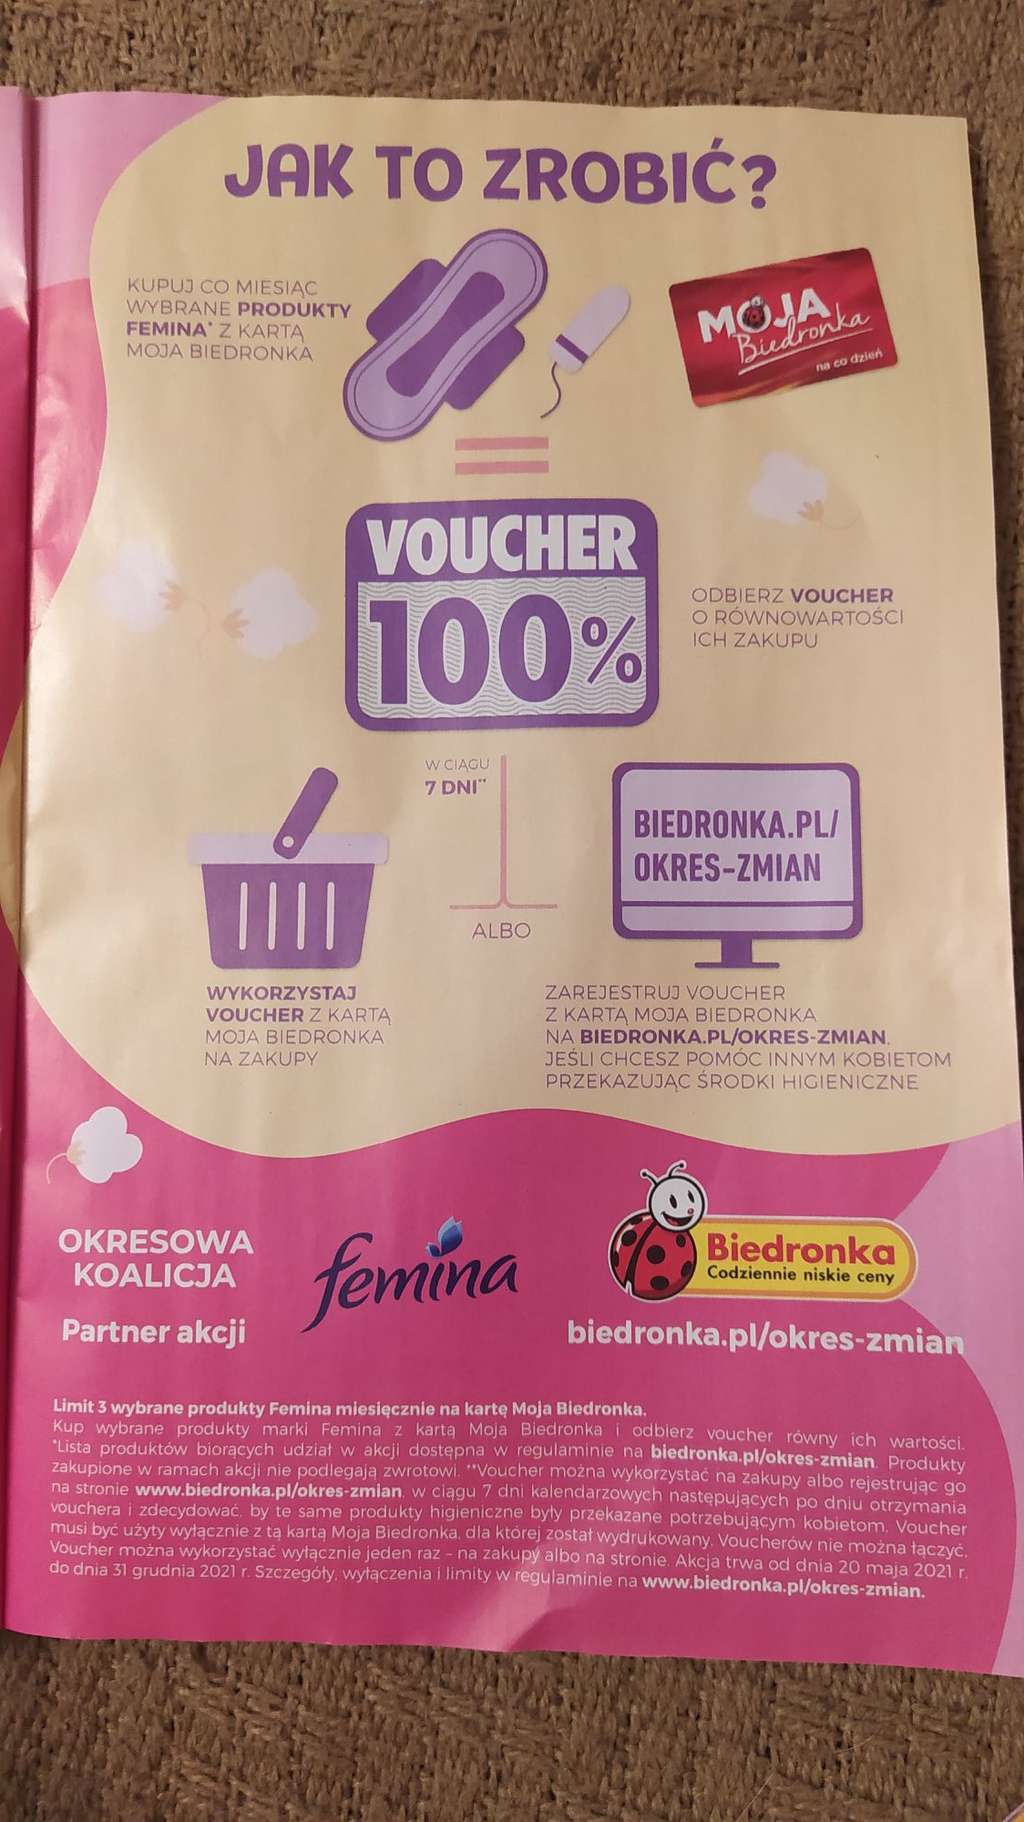 Biedronka: voucher 100% za produkty Femina (podpaski itp)